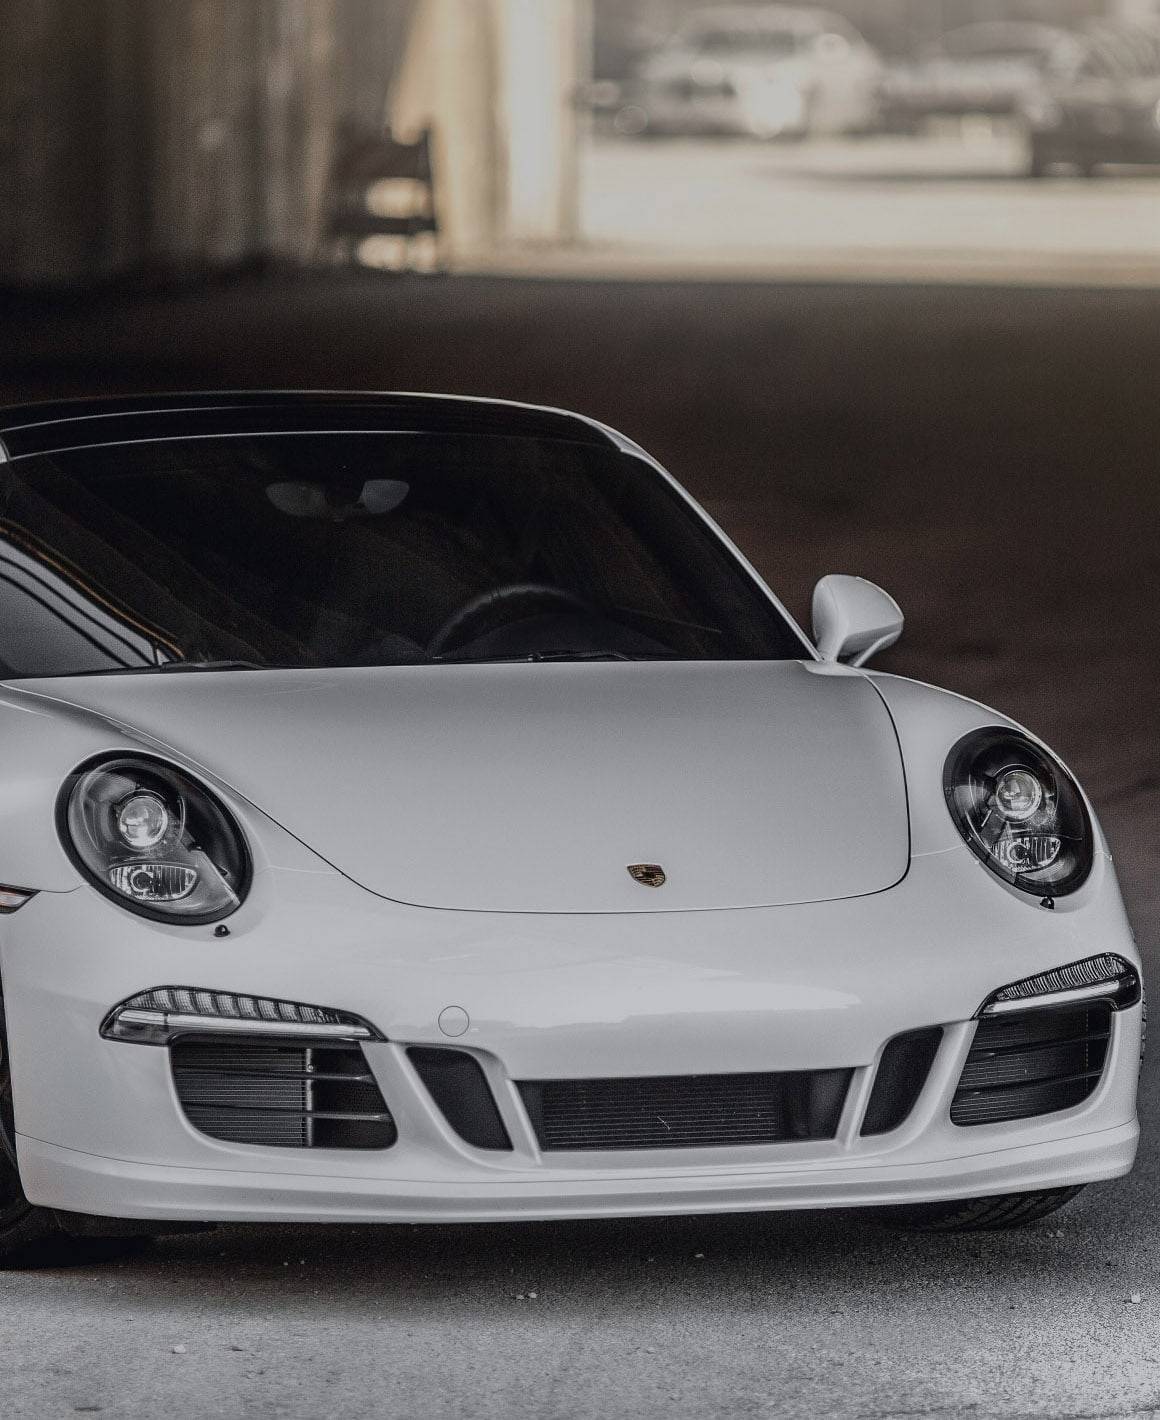 Compare Porsche insurance costs for all models